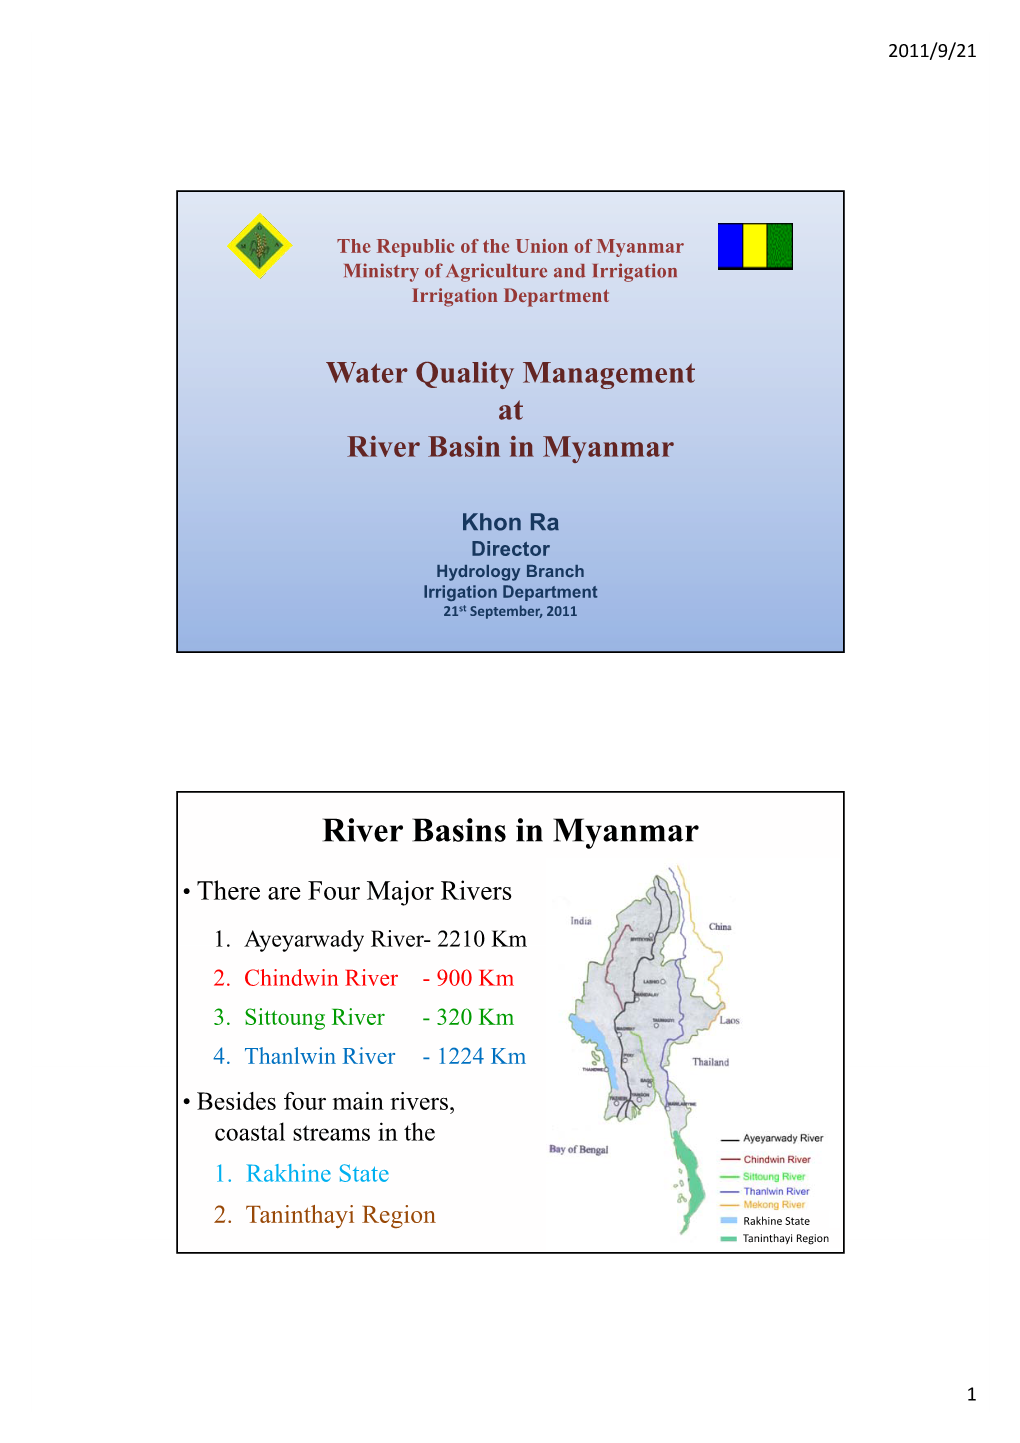 River Basins in Myanmar